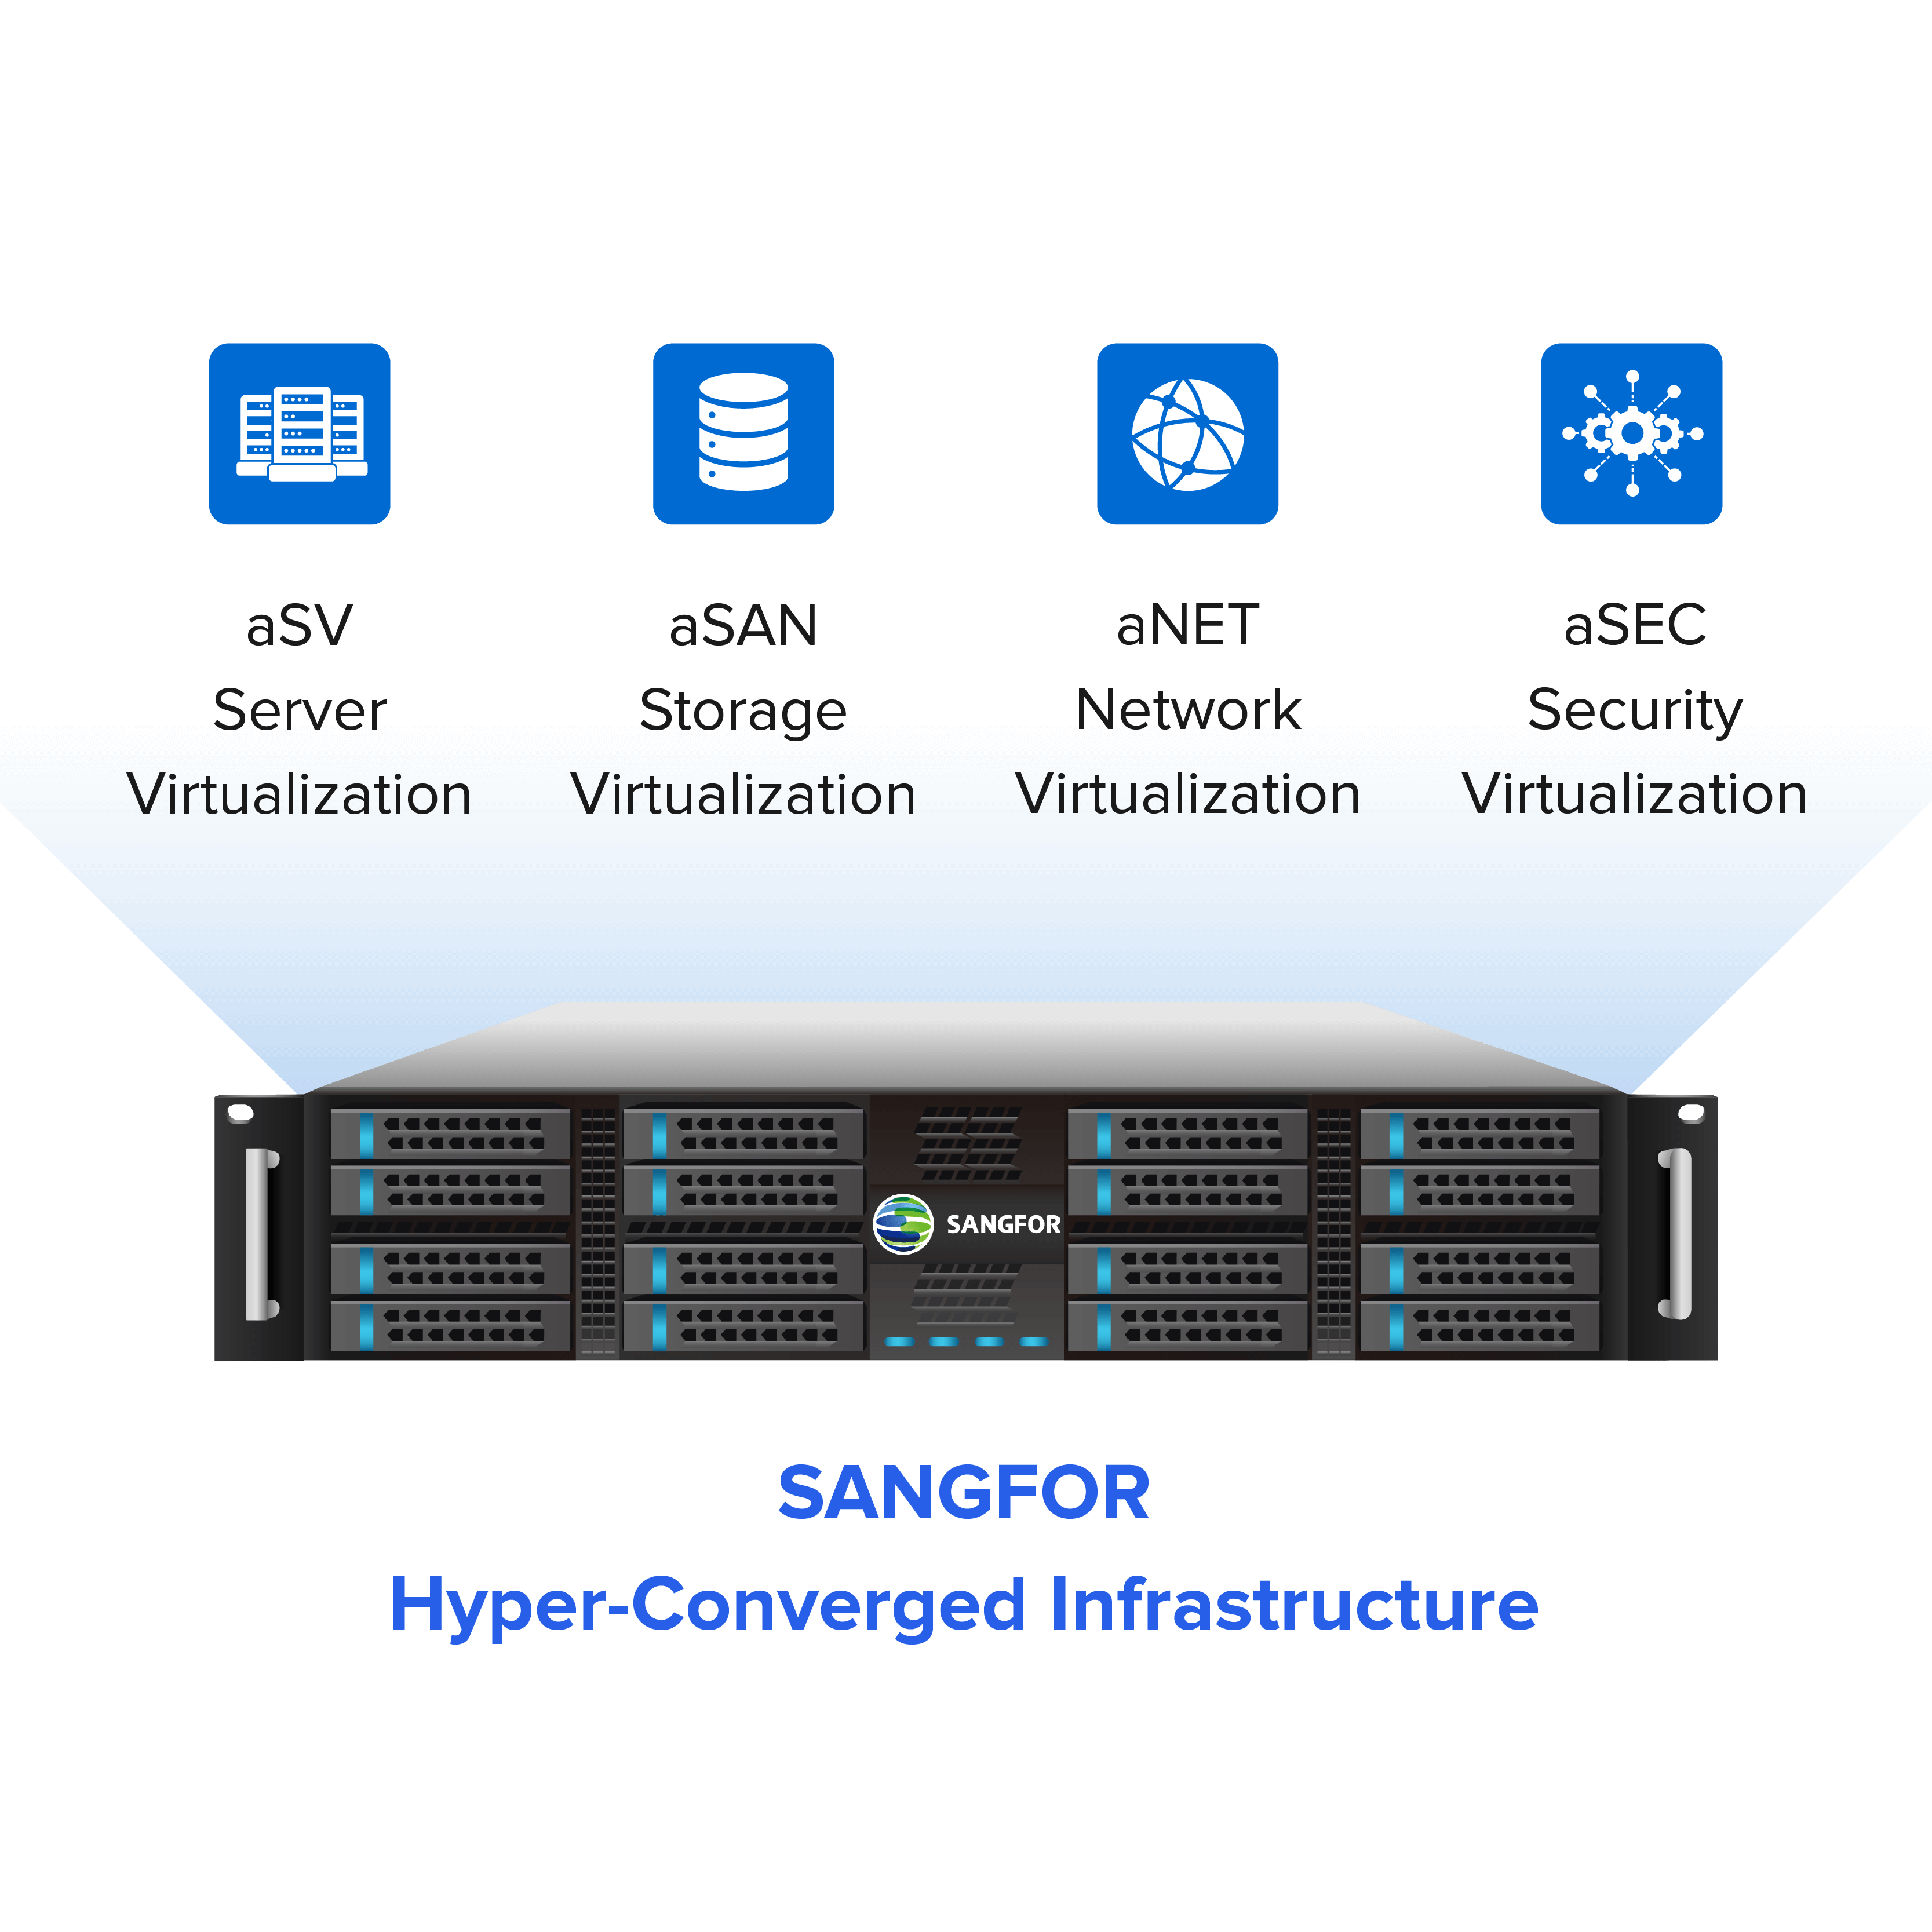 Sangfor HCI - Hyper Converged Infrastructure